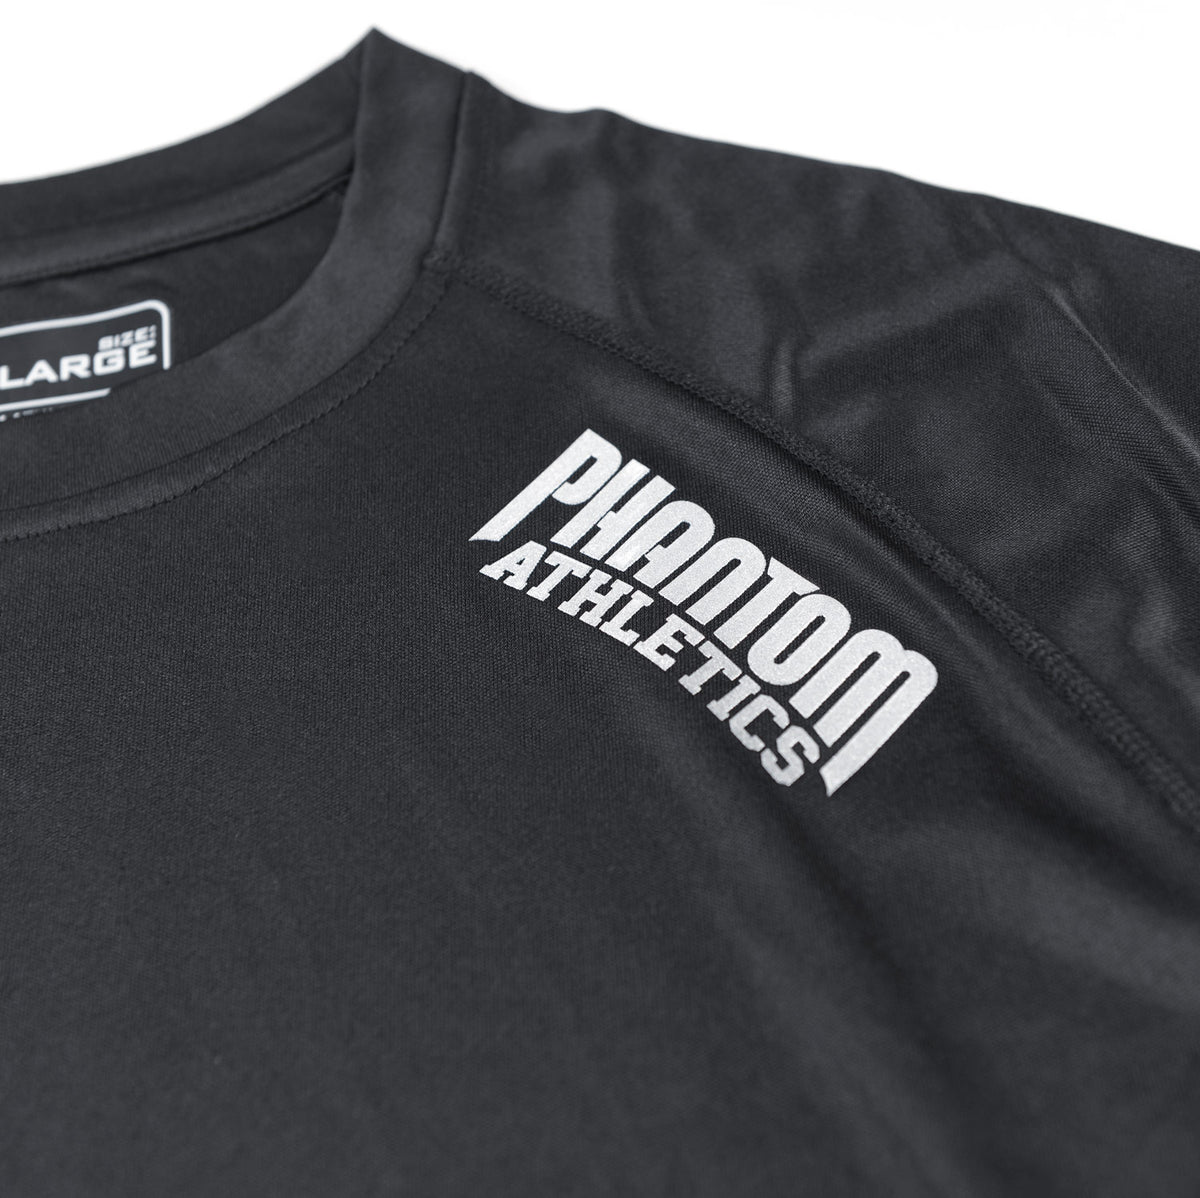 Der hochwertige Silikondruck auf dem Phantom Athletics Tactic Trainingsshirt